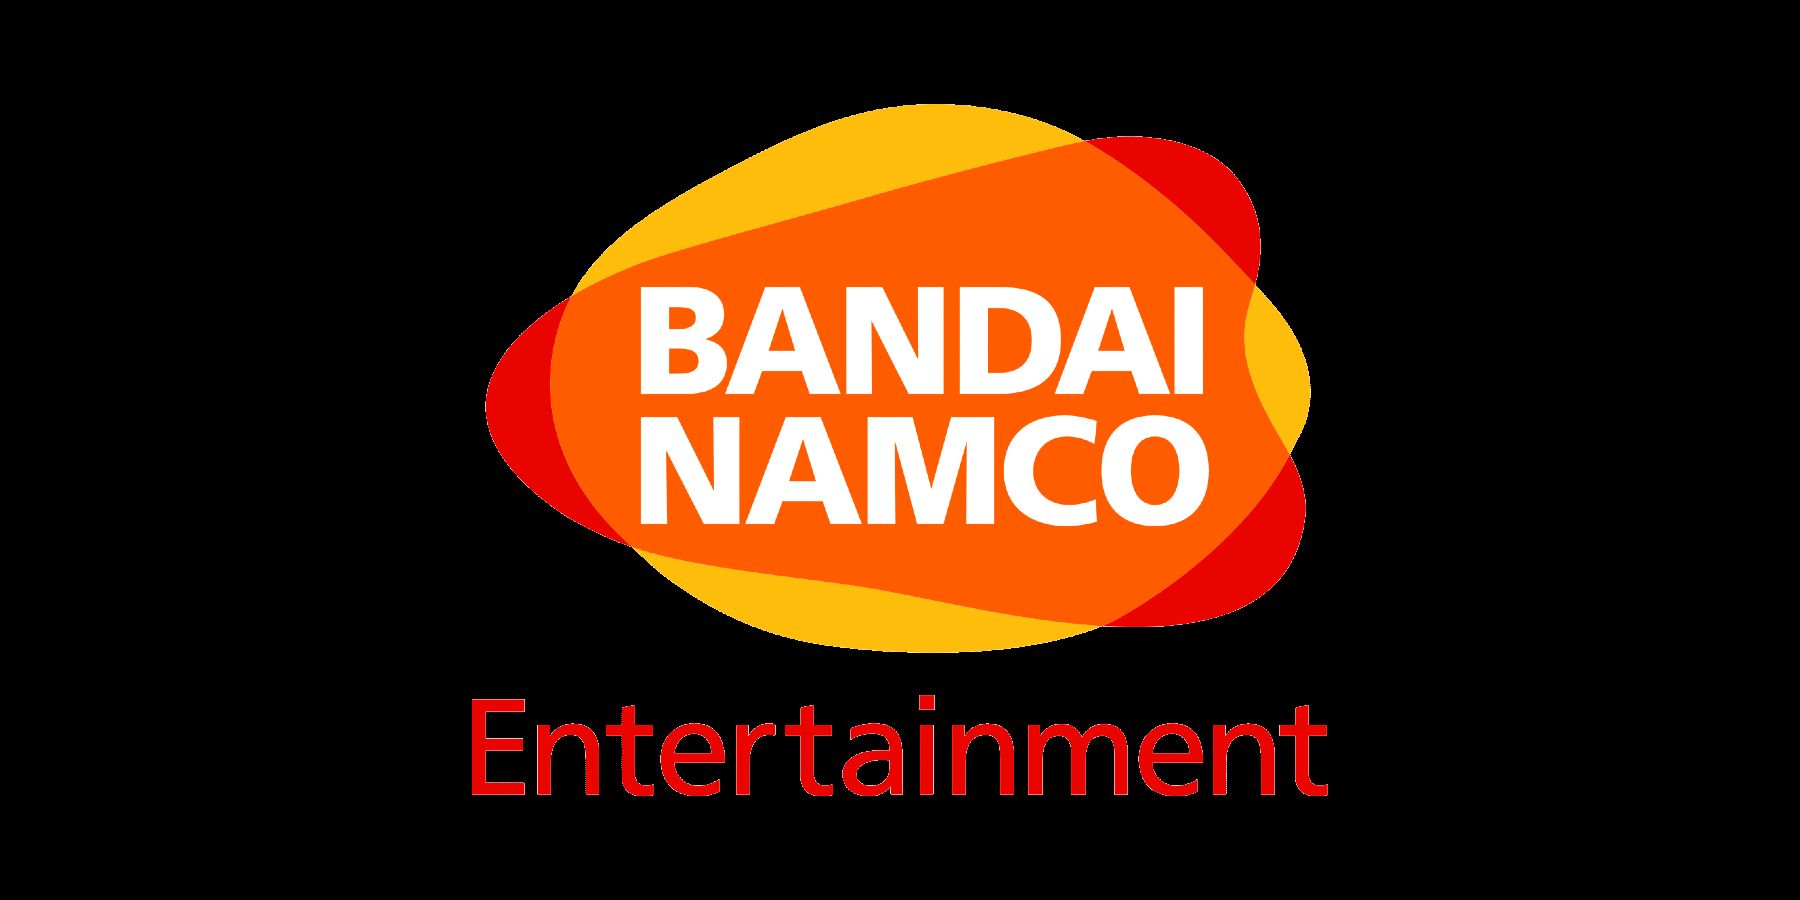 Bandai Namco-ს აქვს ახალი ლოგო